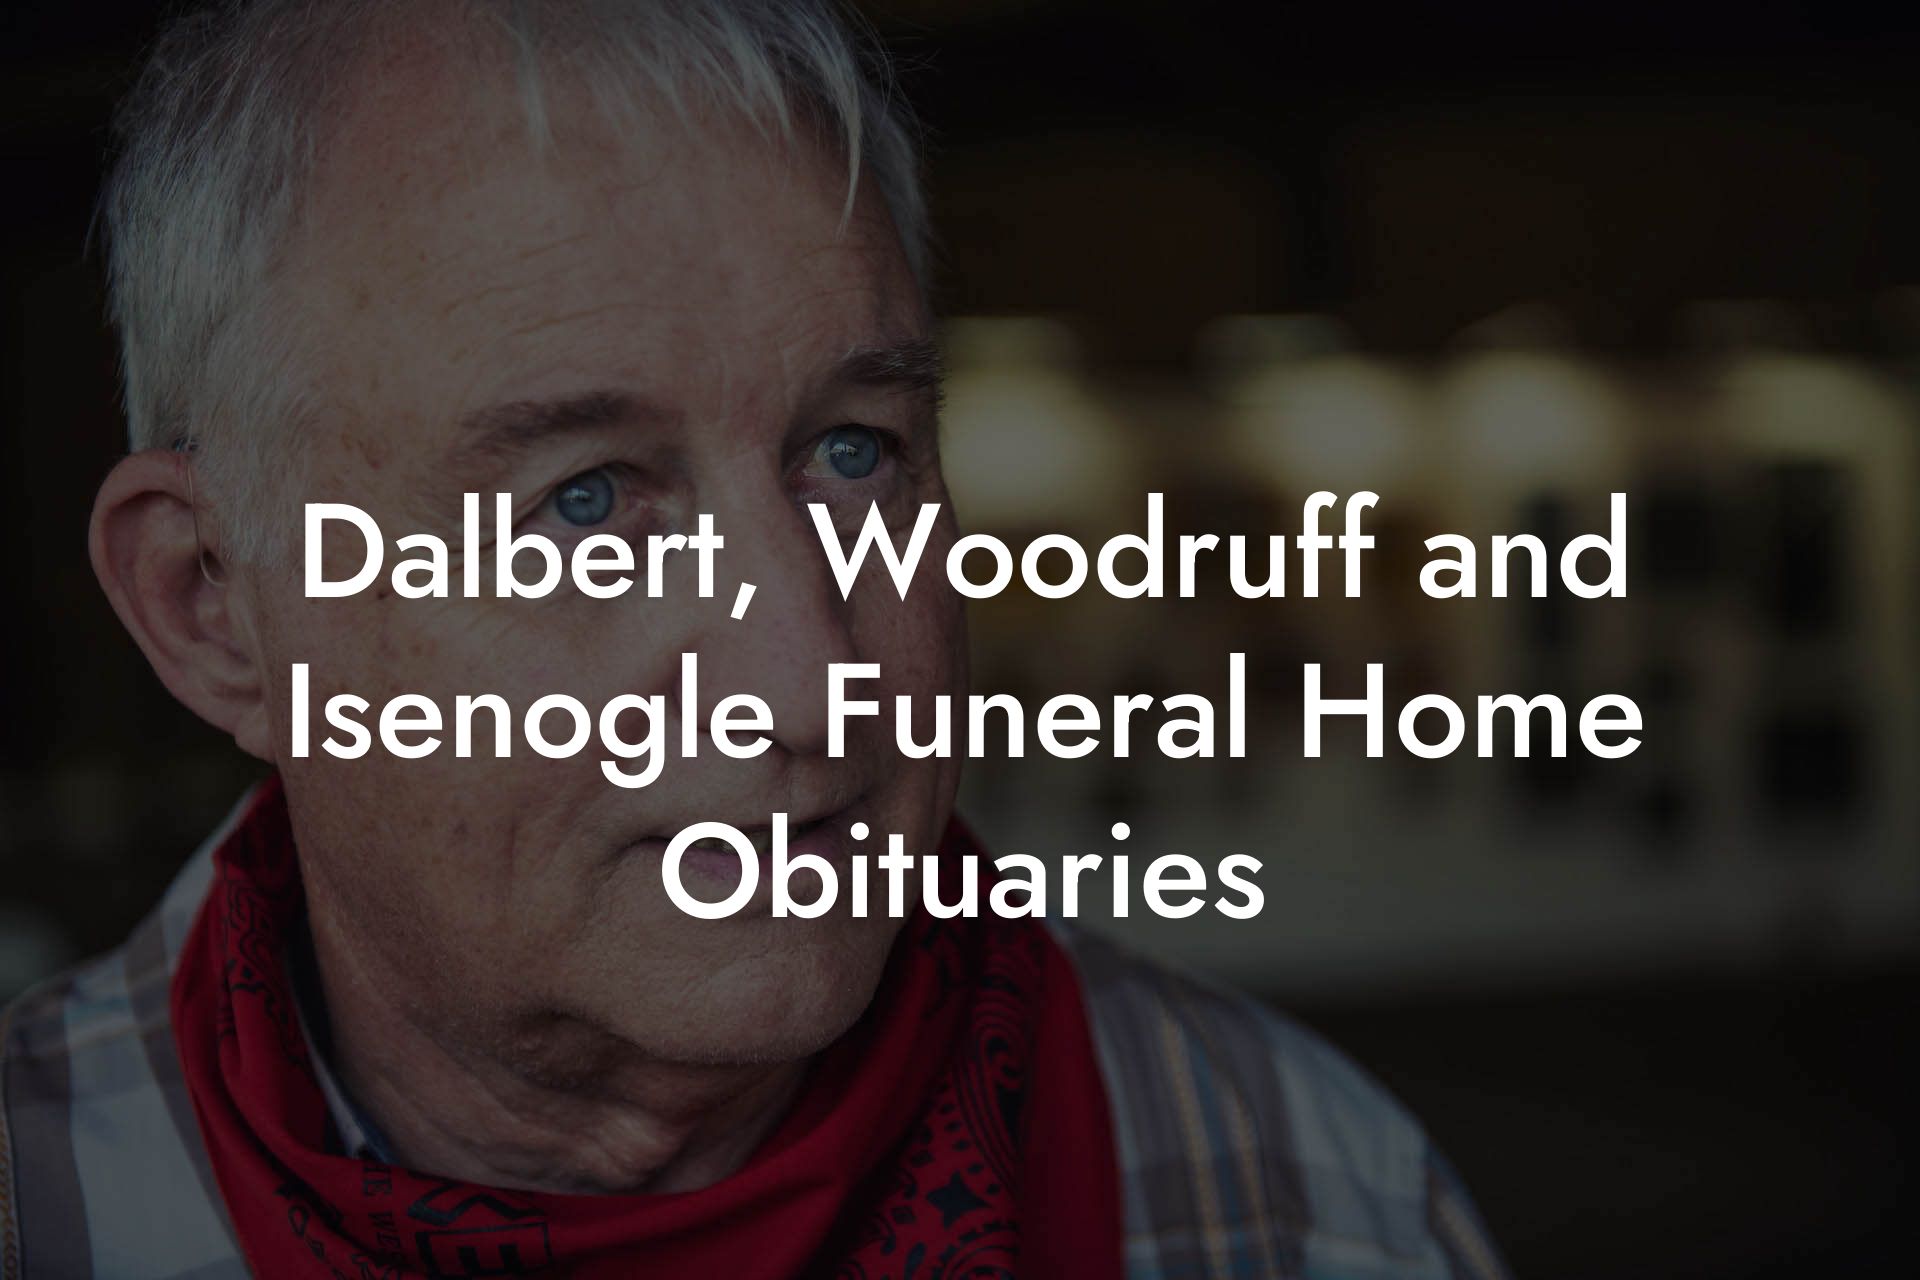 Dalbert, Woodruff and Isenogle Funeral Home Obituaries